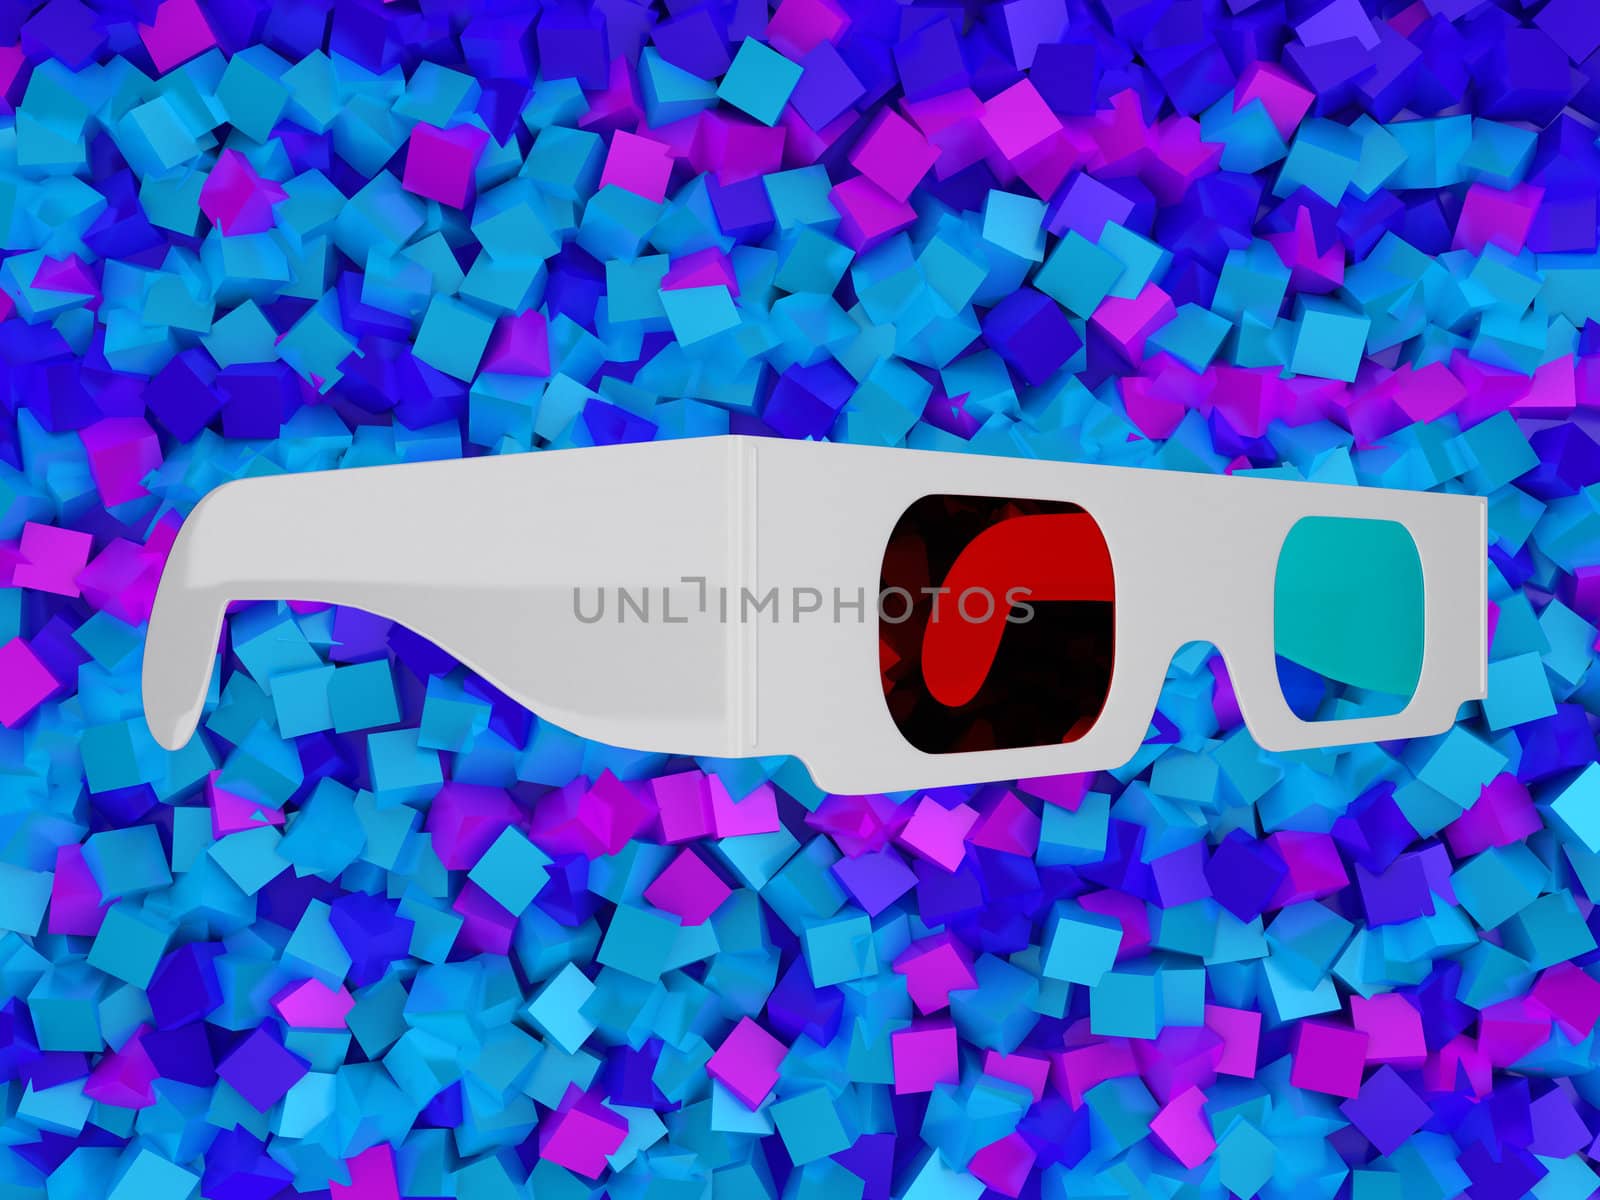 Cinema 3D glasses over colorful blocks by Arsgera